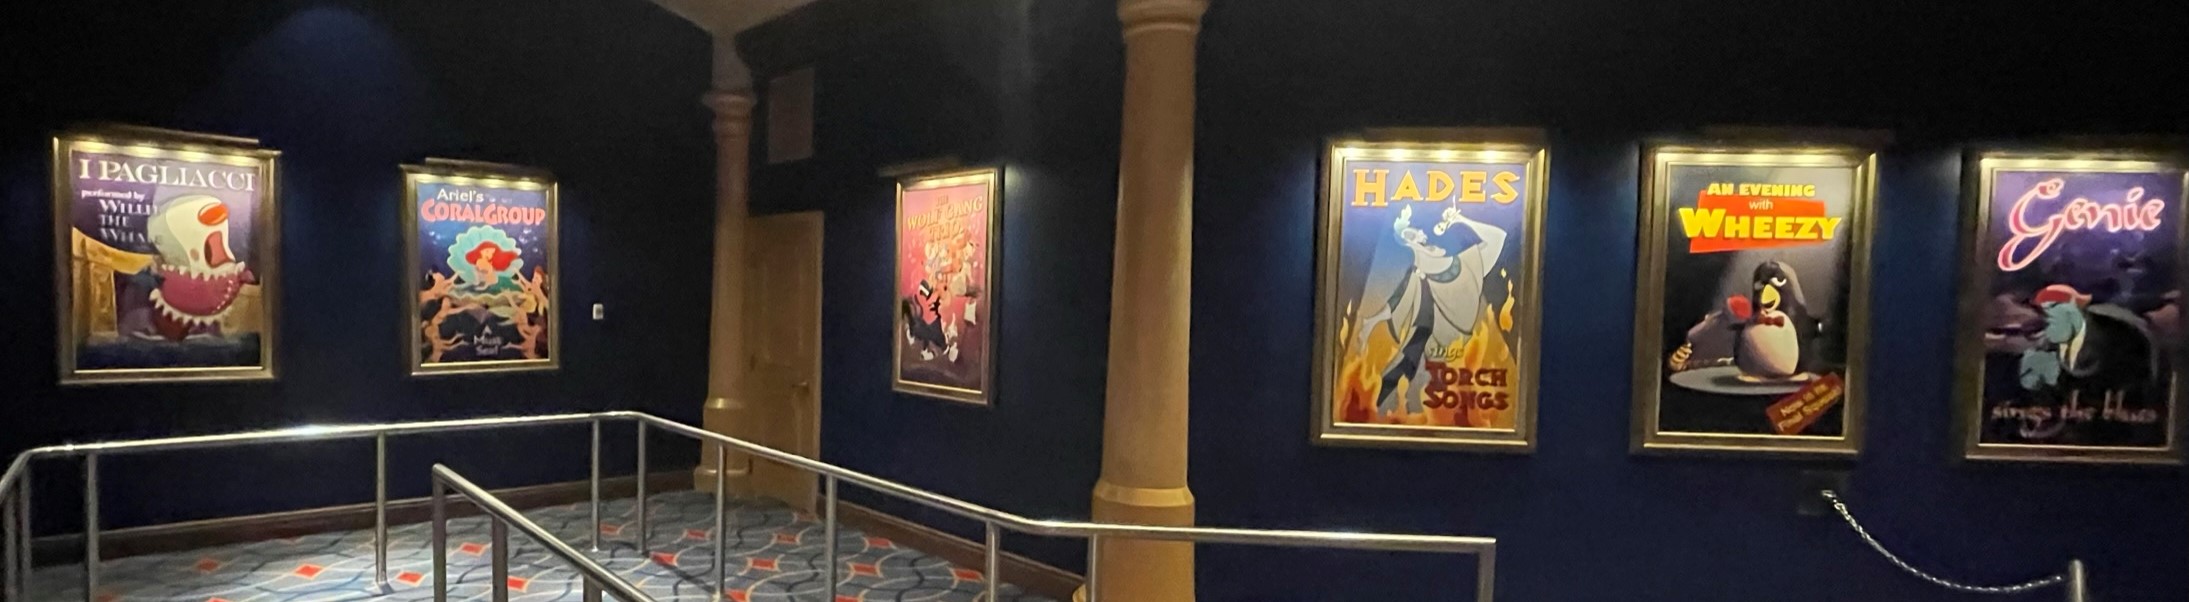 Mickey's PhilharMagic | Walt Disney World | Disneyland | Coco Scene | Full Show | 2022